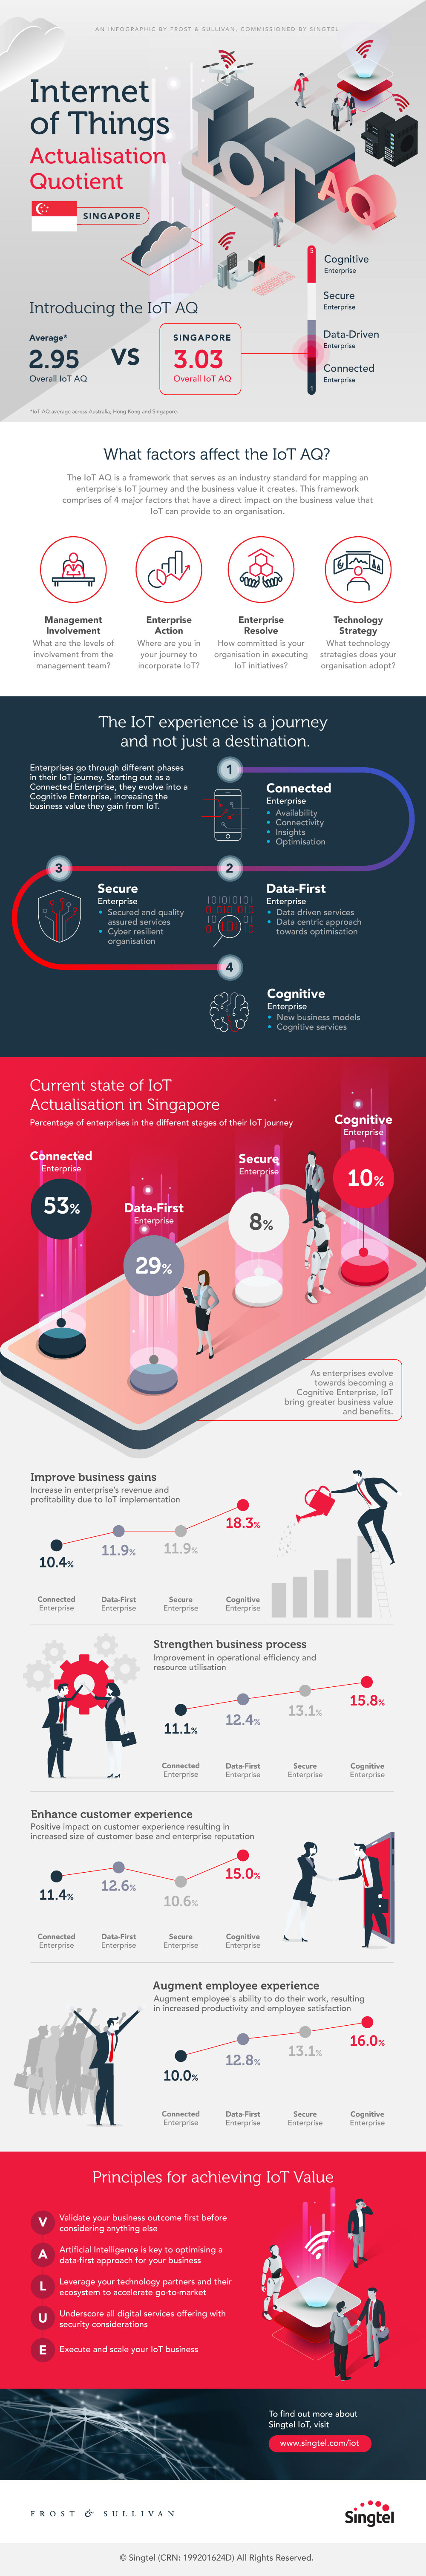 Internet of Things IoT singapore Internet Big Data analytics corporate Digital transformation